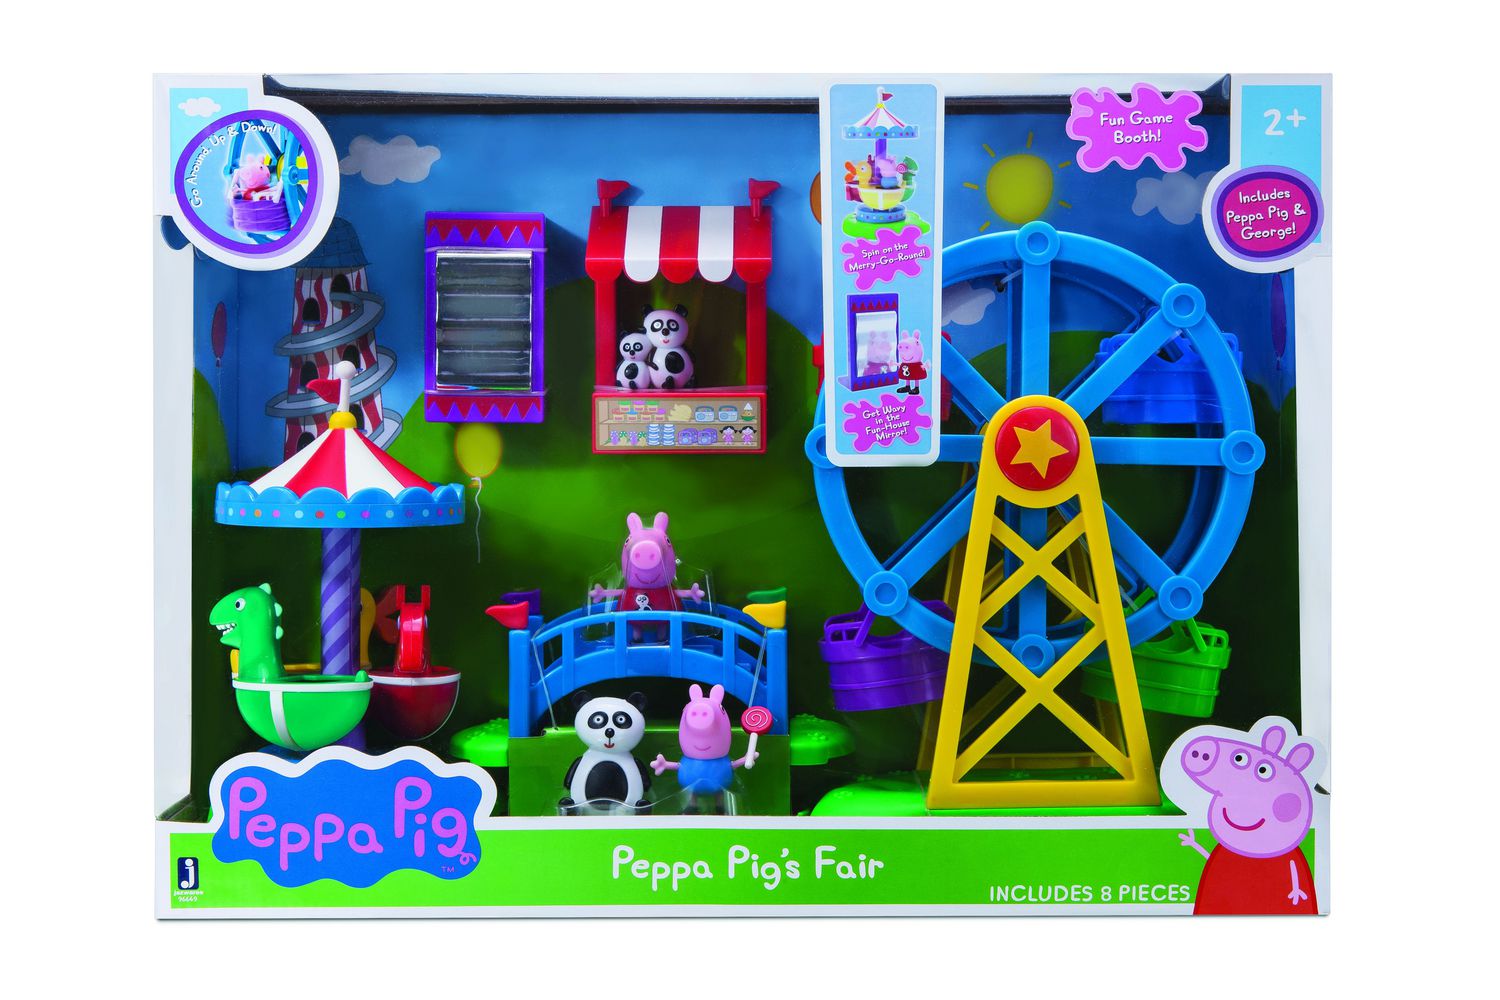 peppa pig ferris wheel toy